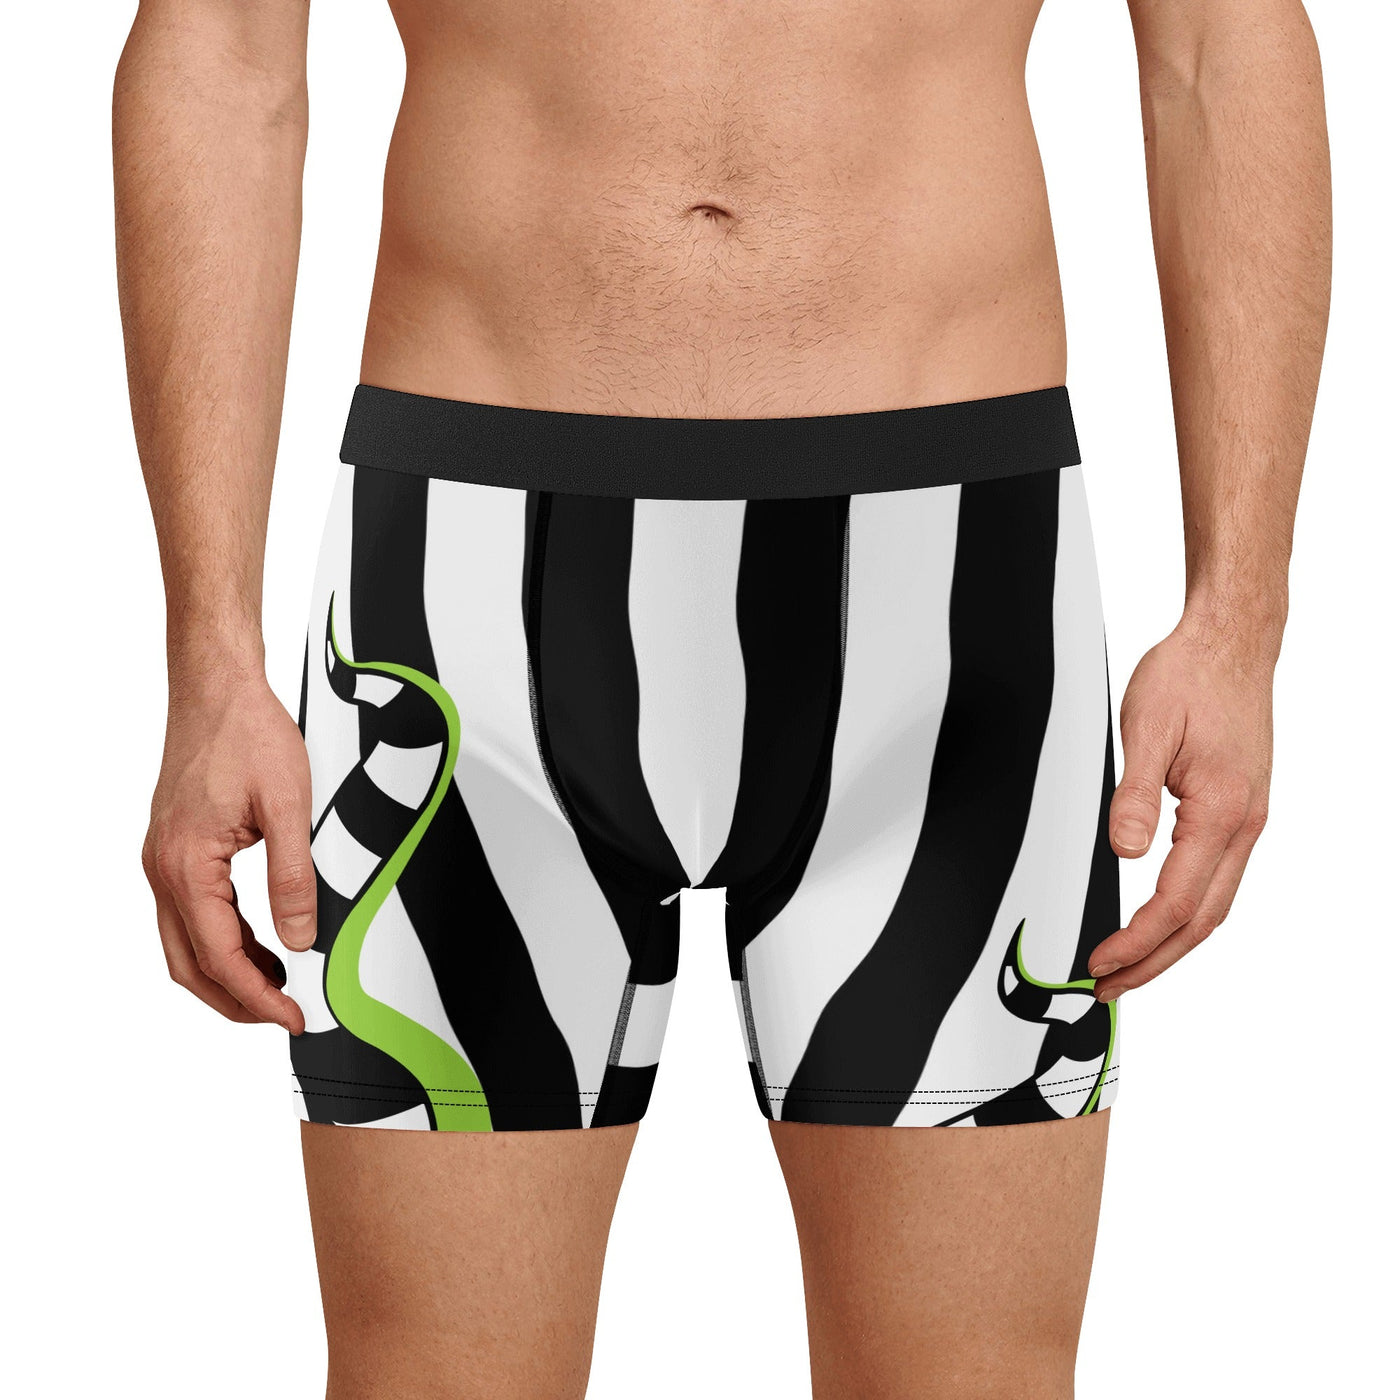 Beetlejuice & Sandworm Mens Boxers Underwear